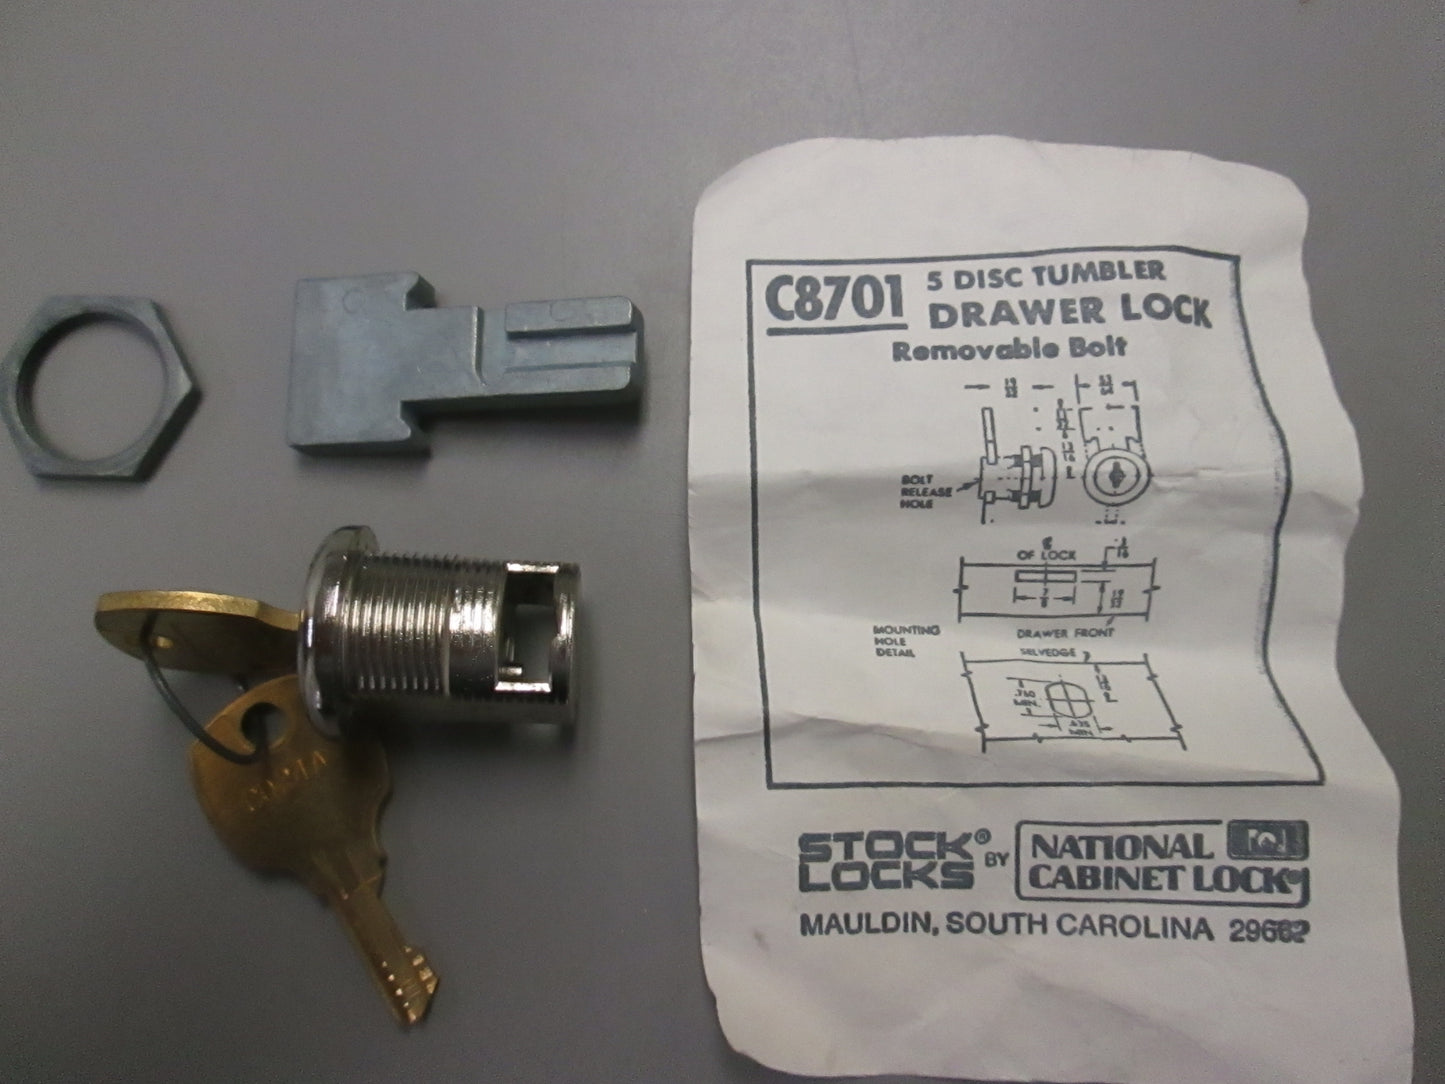 CompX National C8701-14A Metal Desk Lock